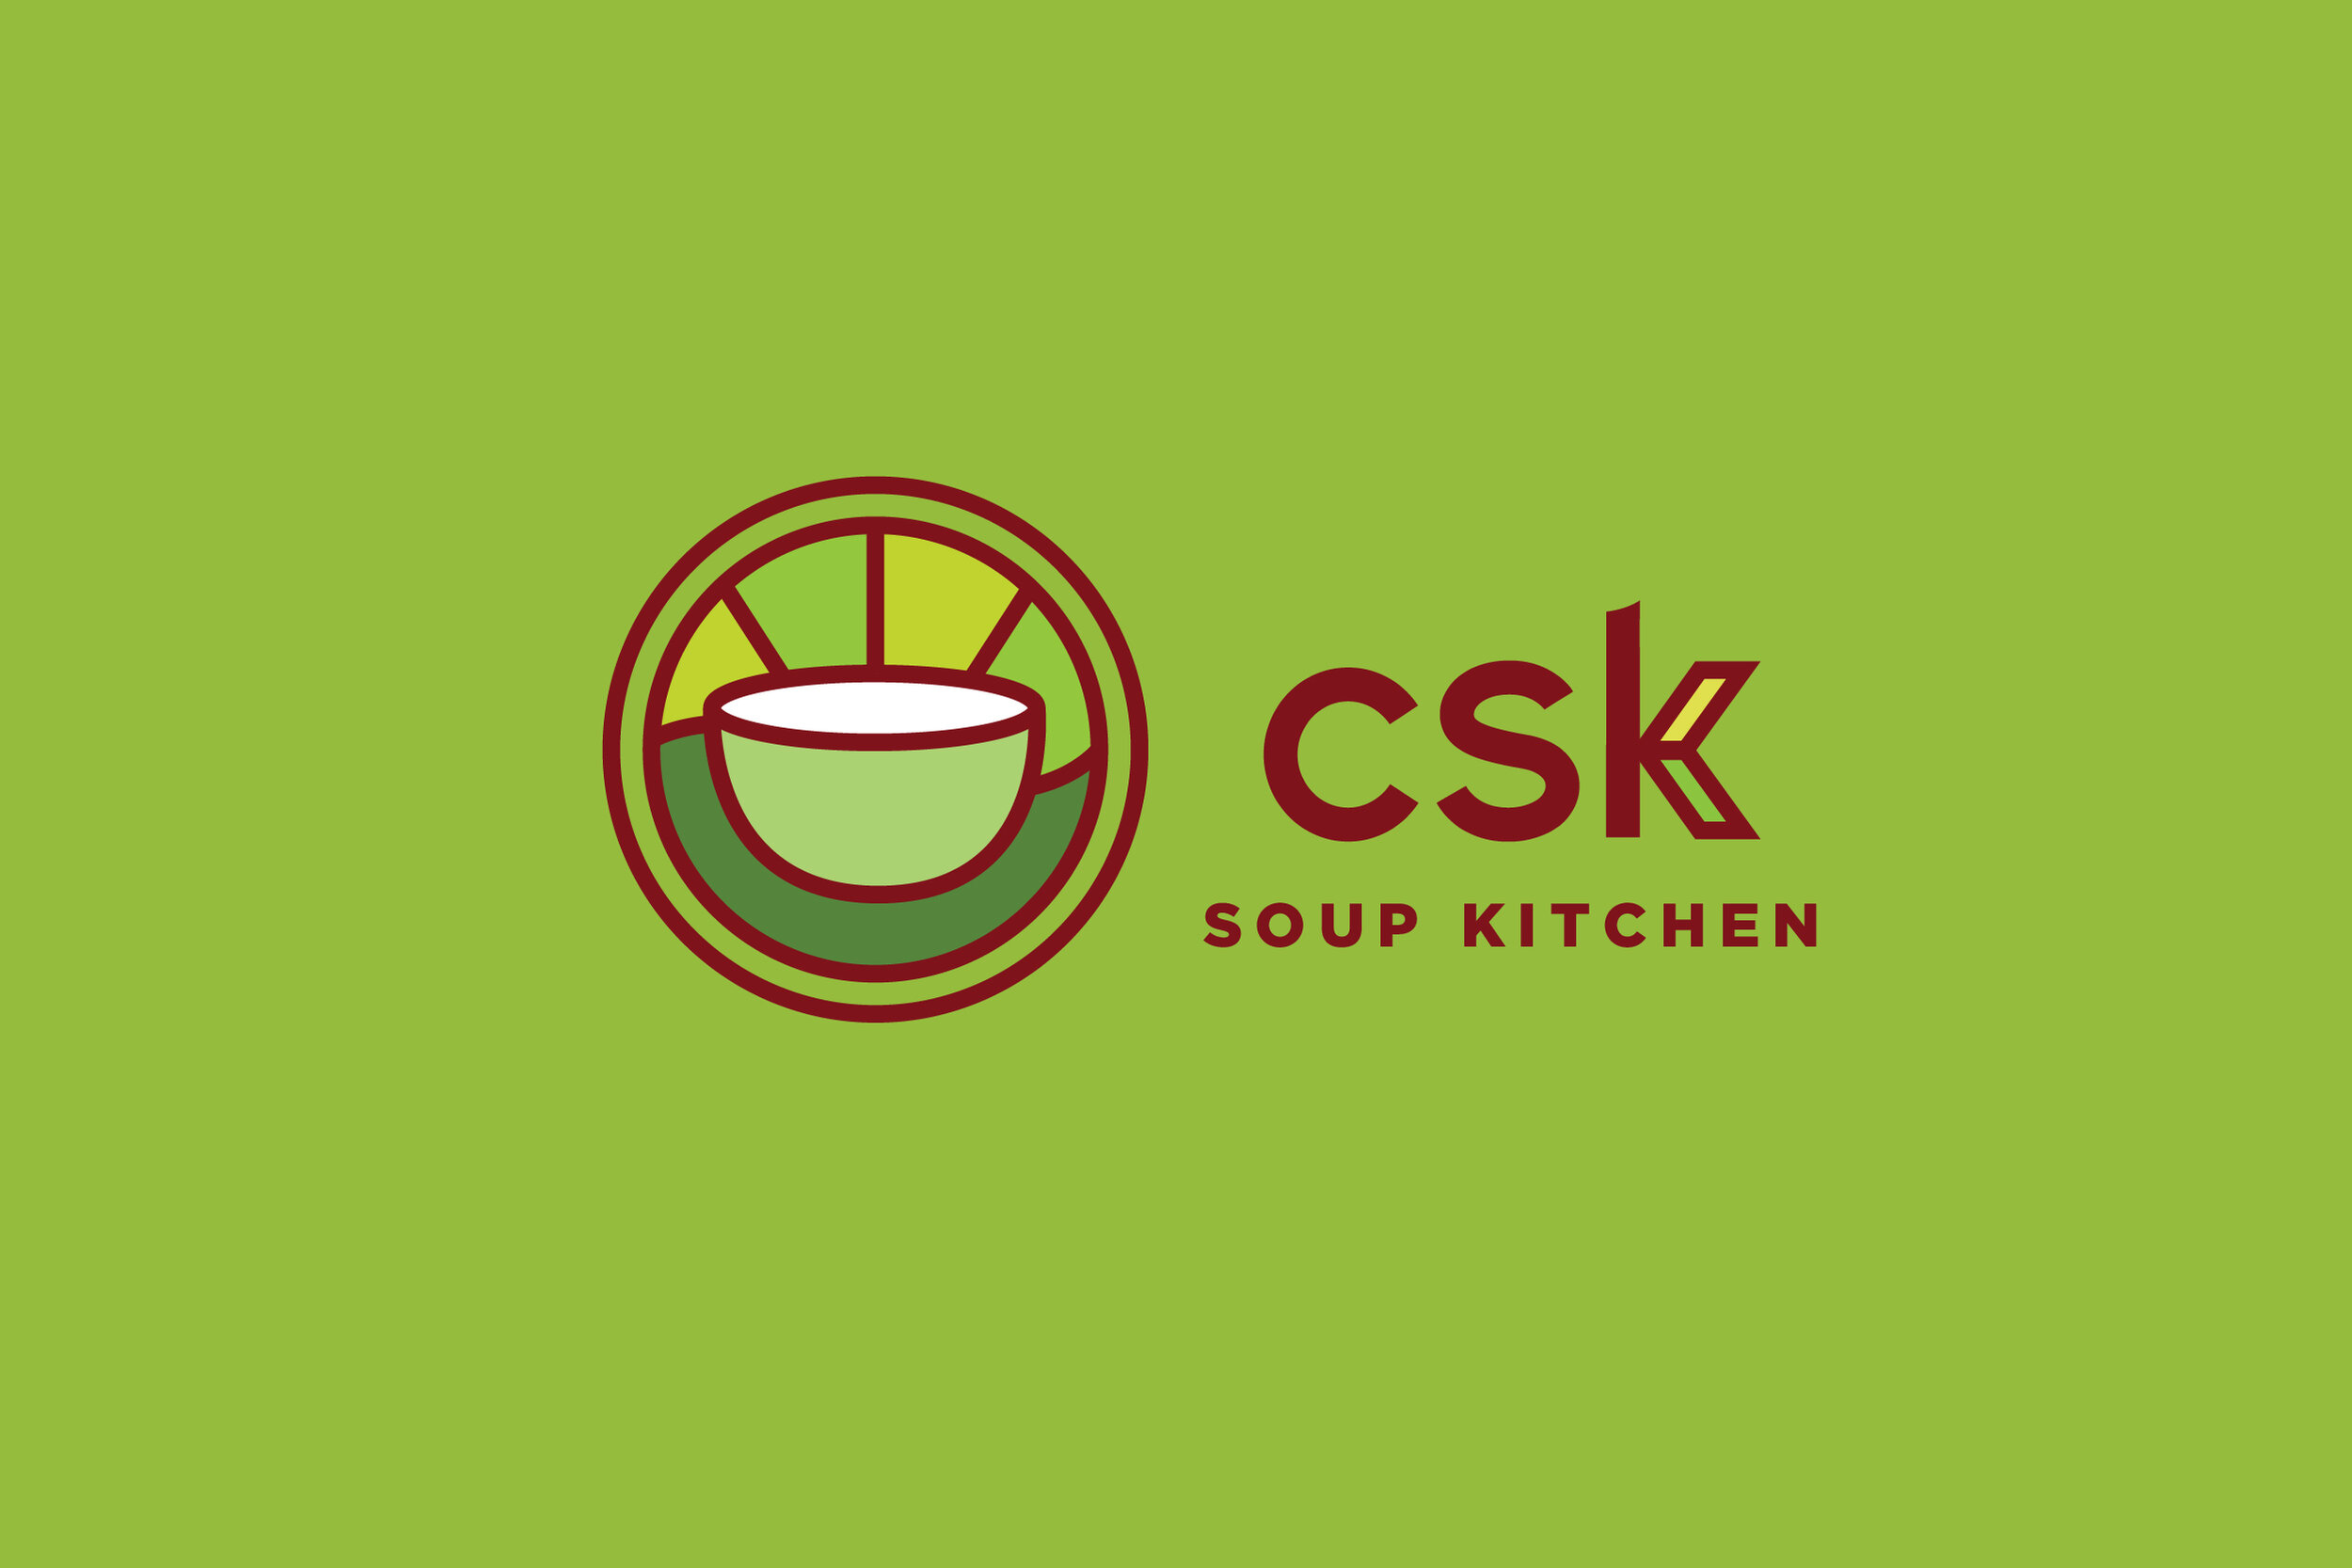 CSK-Outreach-Website-Images_Soup-Kitchen.jpg